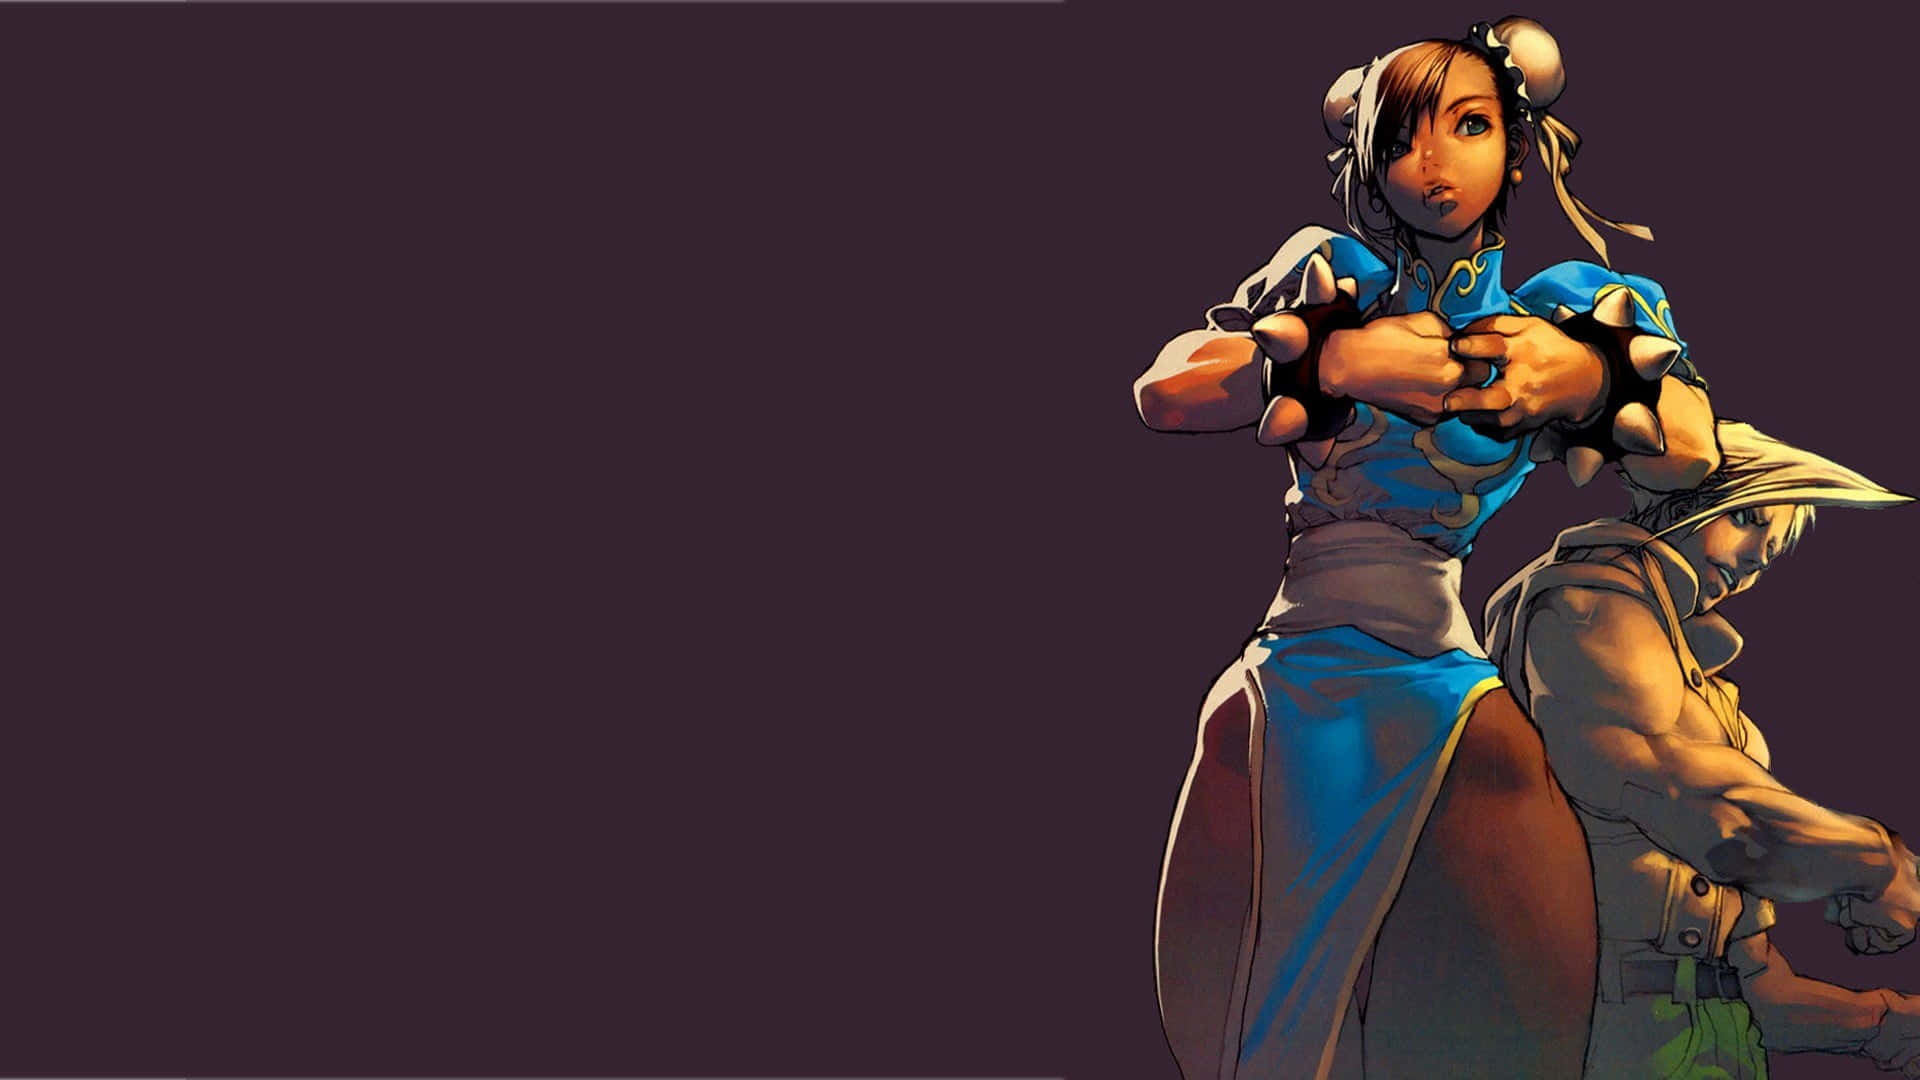 Épicaescena De Batalla De Los Personajes De Street Fighter. Fondo de pantalla